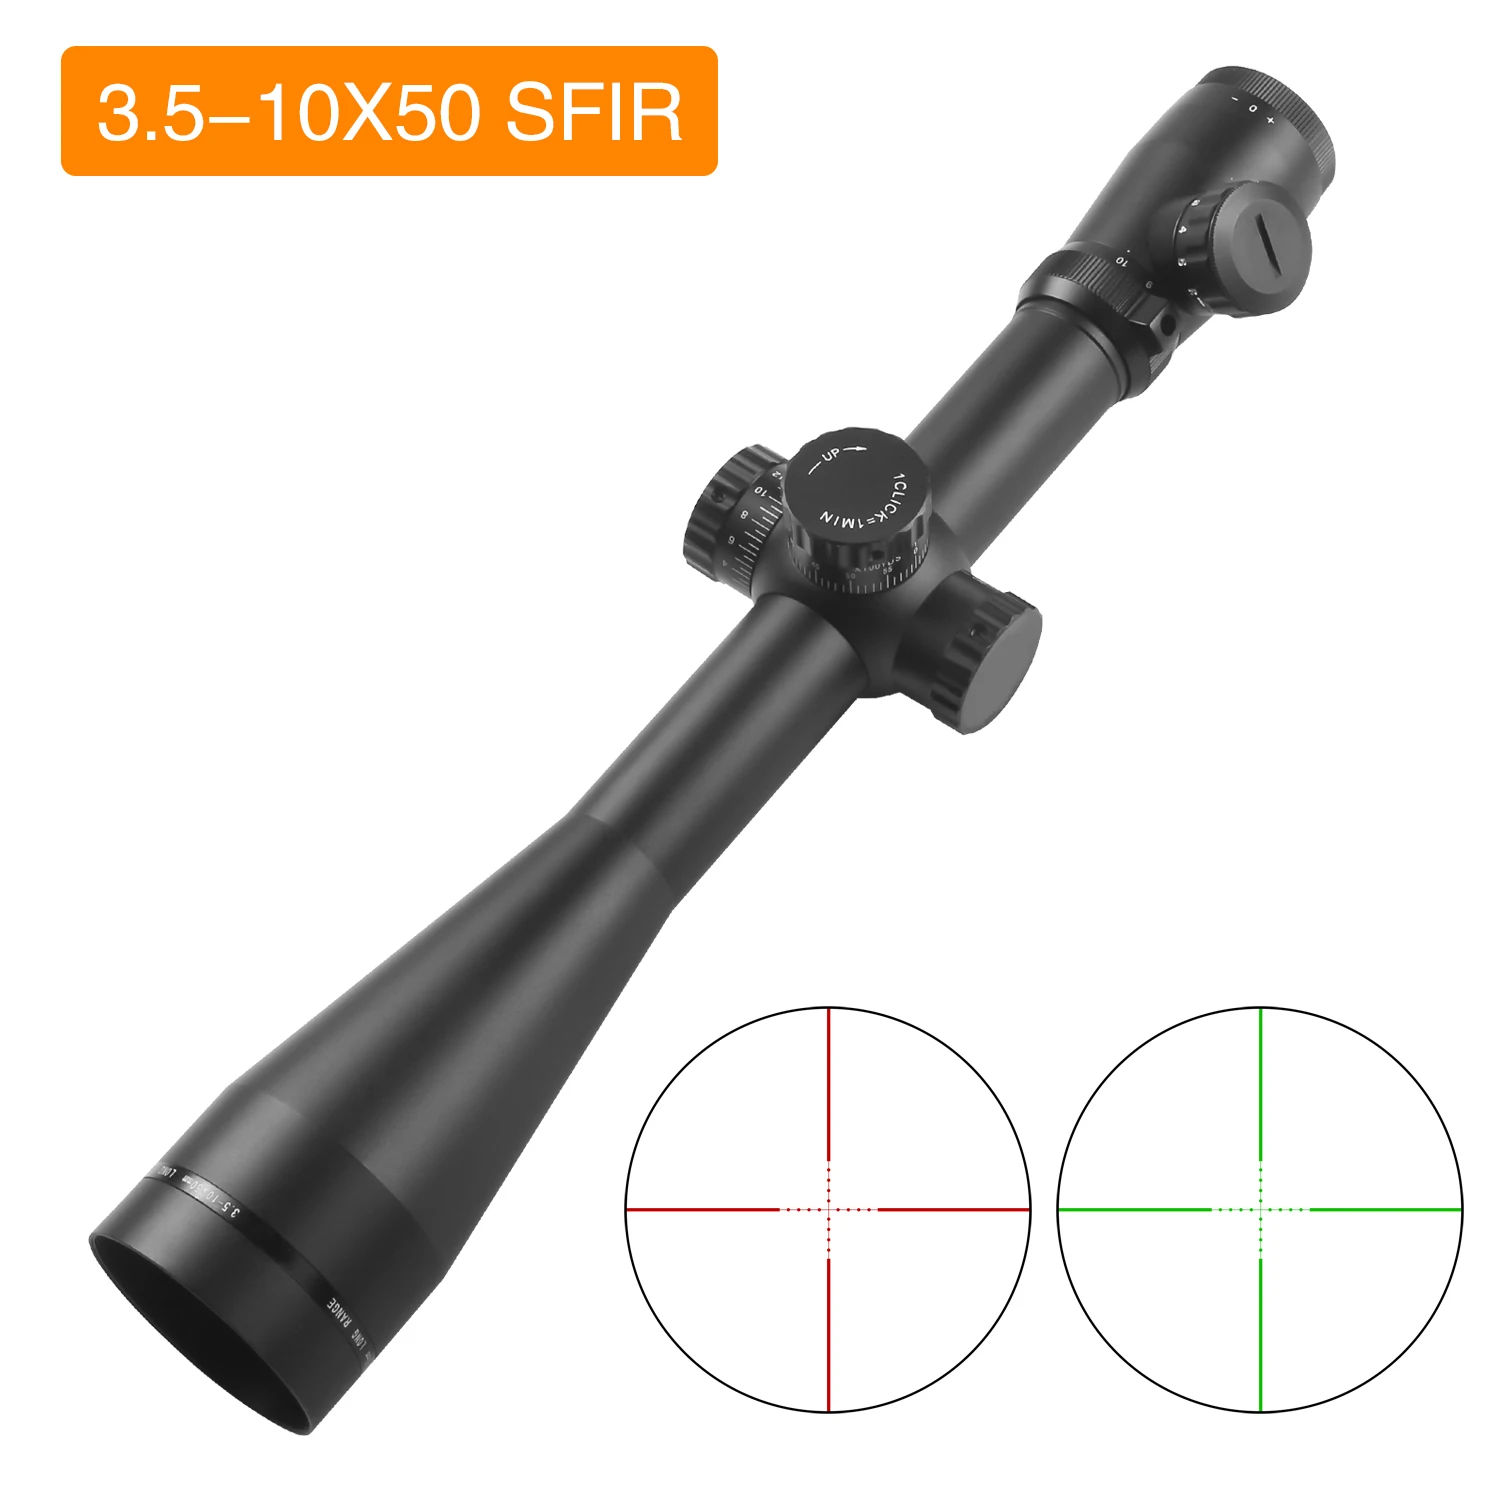 

M3 3.5-10X50 SFIR Long Range Tactical Riflescope Hunting Rifle Scopes Airsoft PCP Sight Optic Telescope 30mm Tube